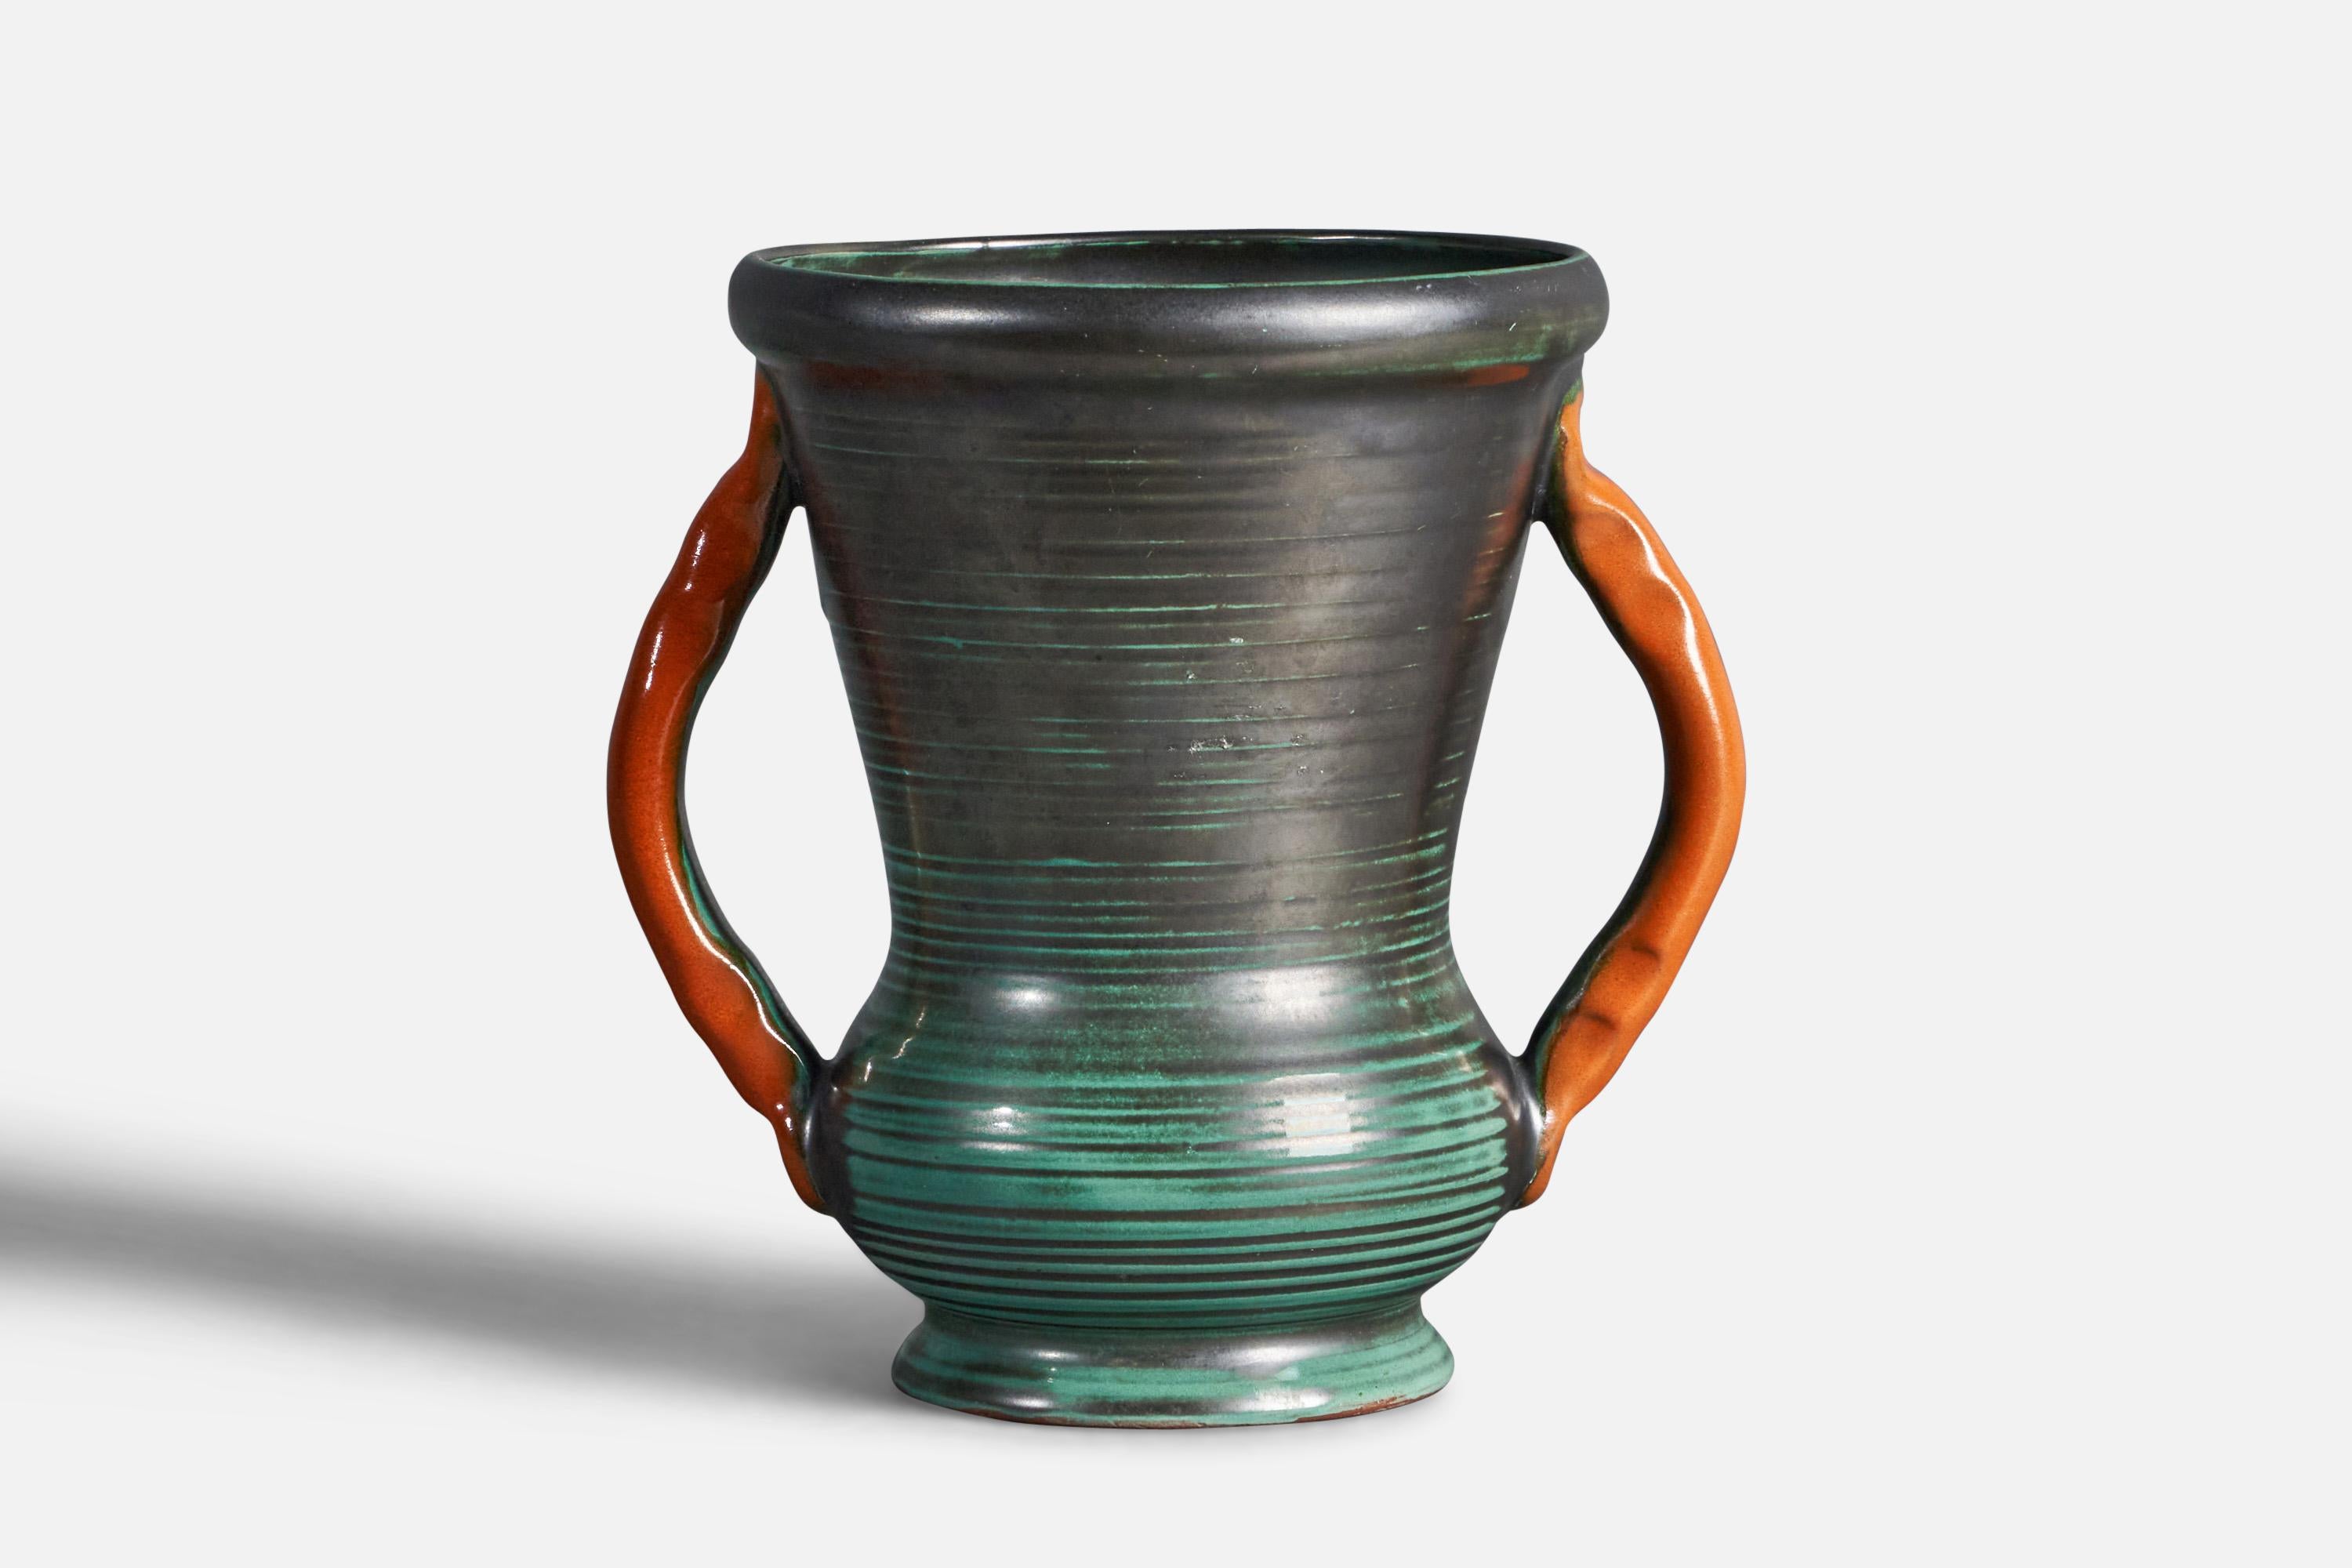 A green and orange-glazed earthenware vase designed and produced by Upsala Ekeby, c. 1930s.